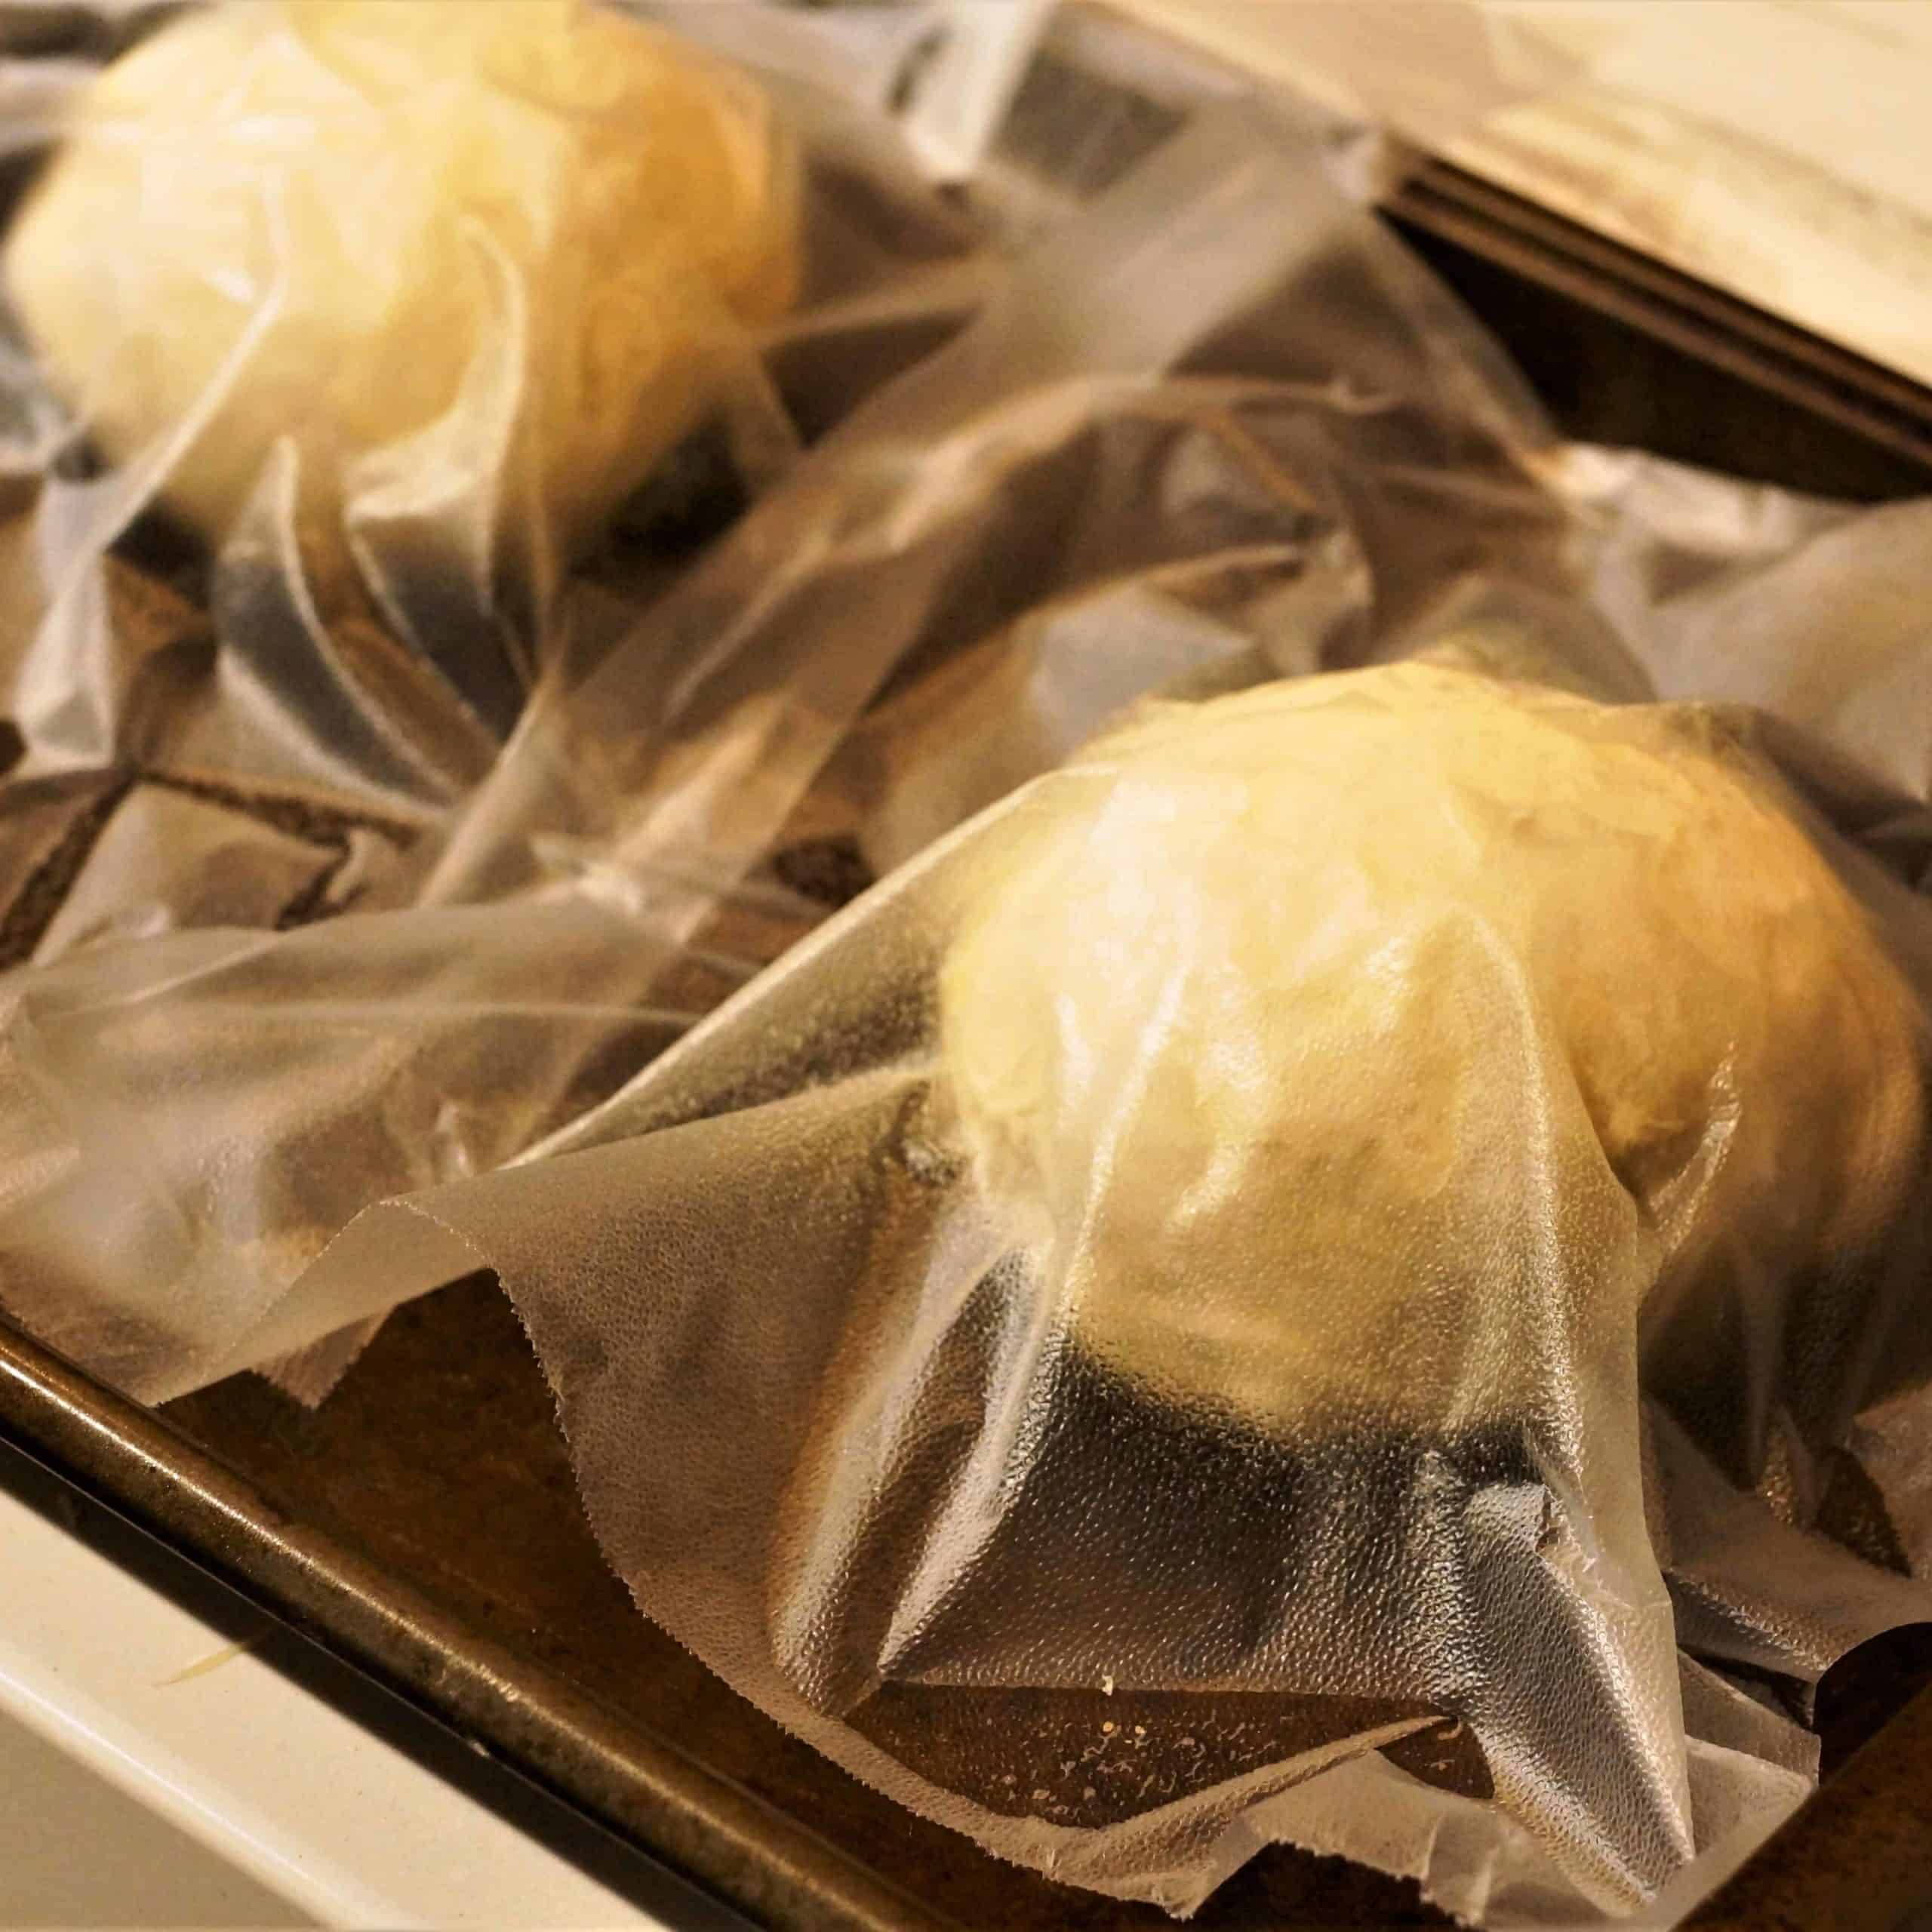 Dough balls rising, covered in plastic wrap.